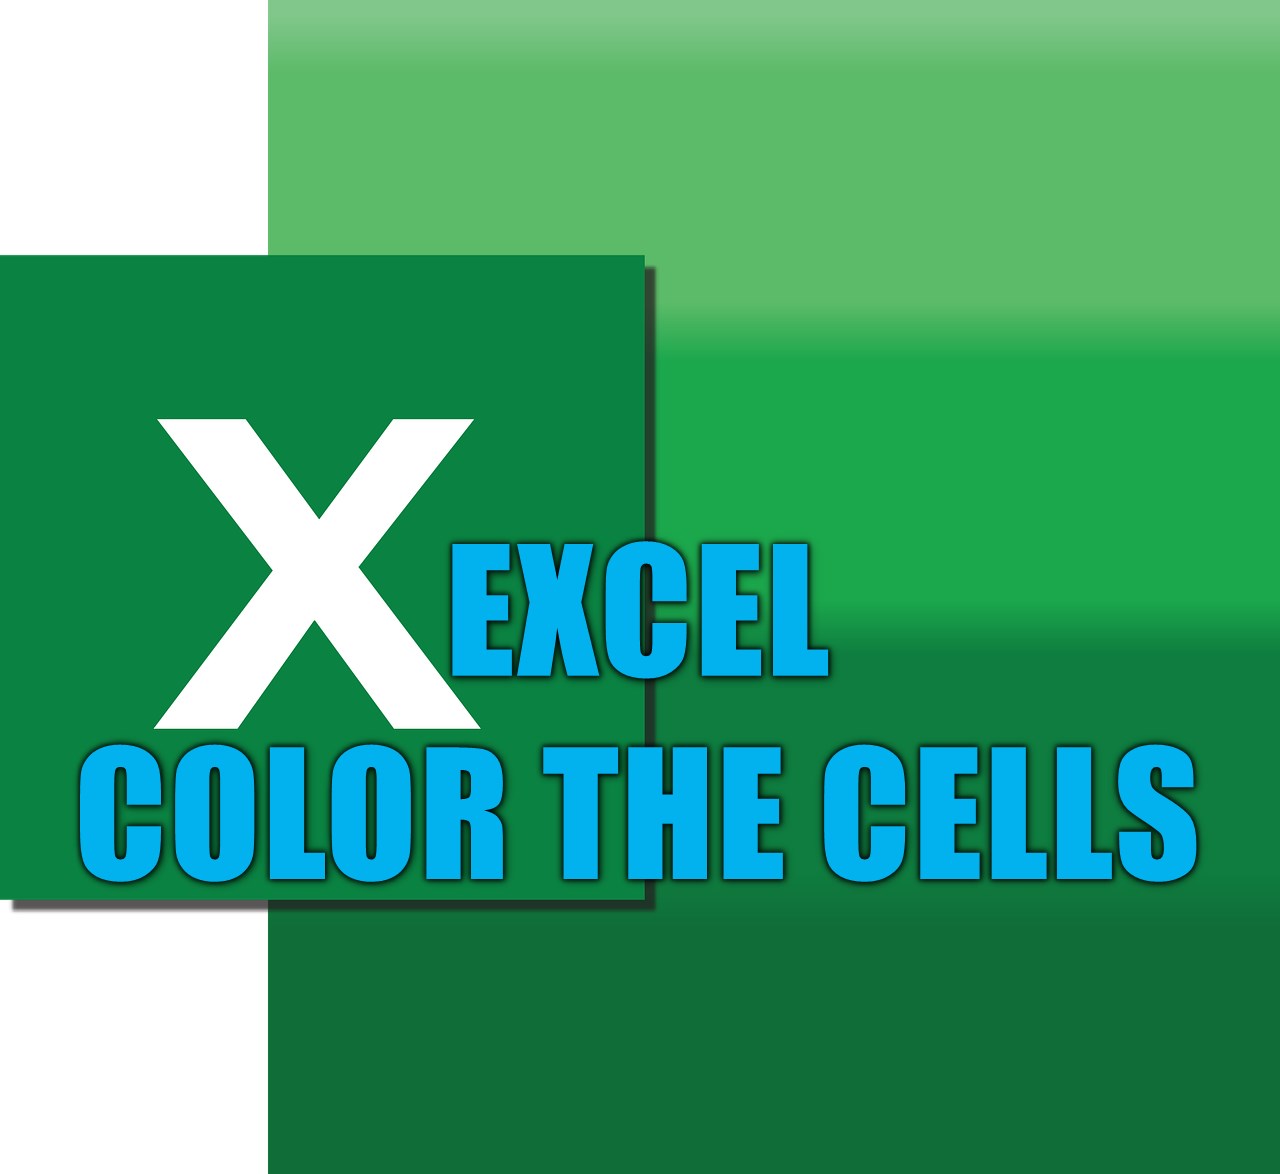 【Excel】効率よく選択したセルに連続して色を塗る(画像解説)